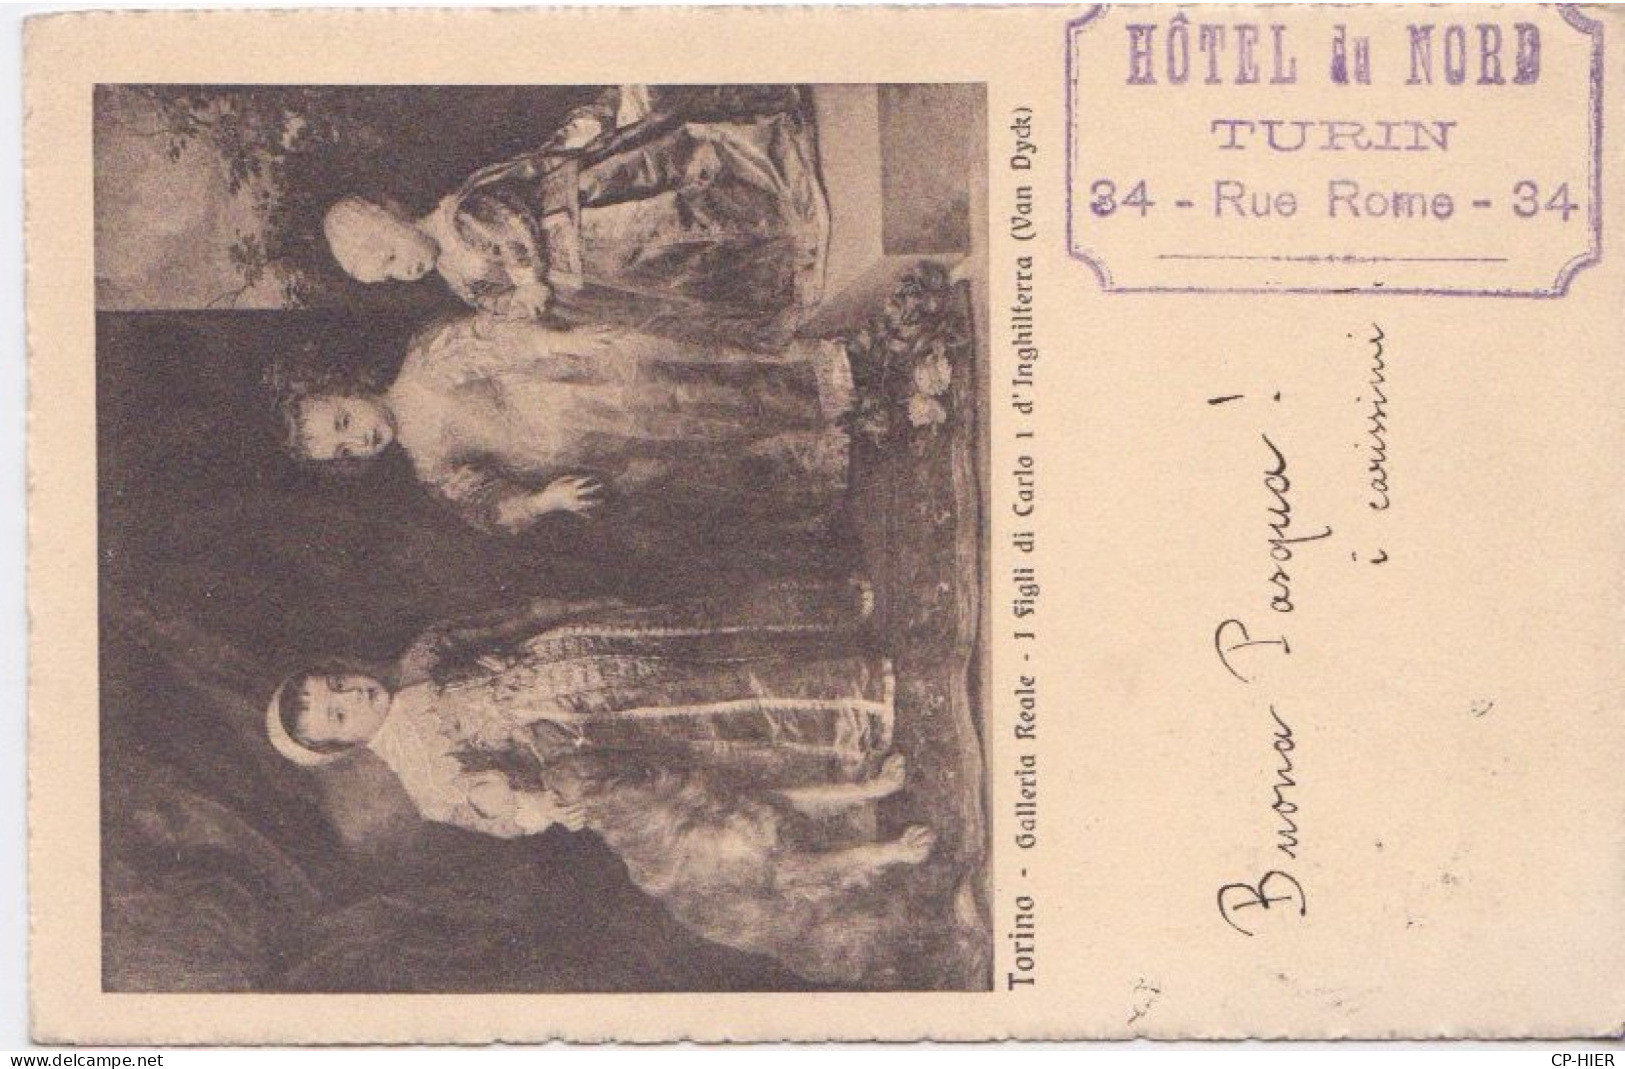 1908 - ITALIE - ITALIA - SICILIA - TORINO - CACHET HOTEL DU NORD DE TURIN  34 RUE DE ROME - Cafes, Hotels & Restaurants